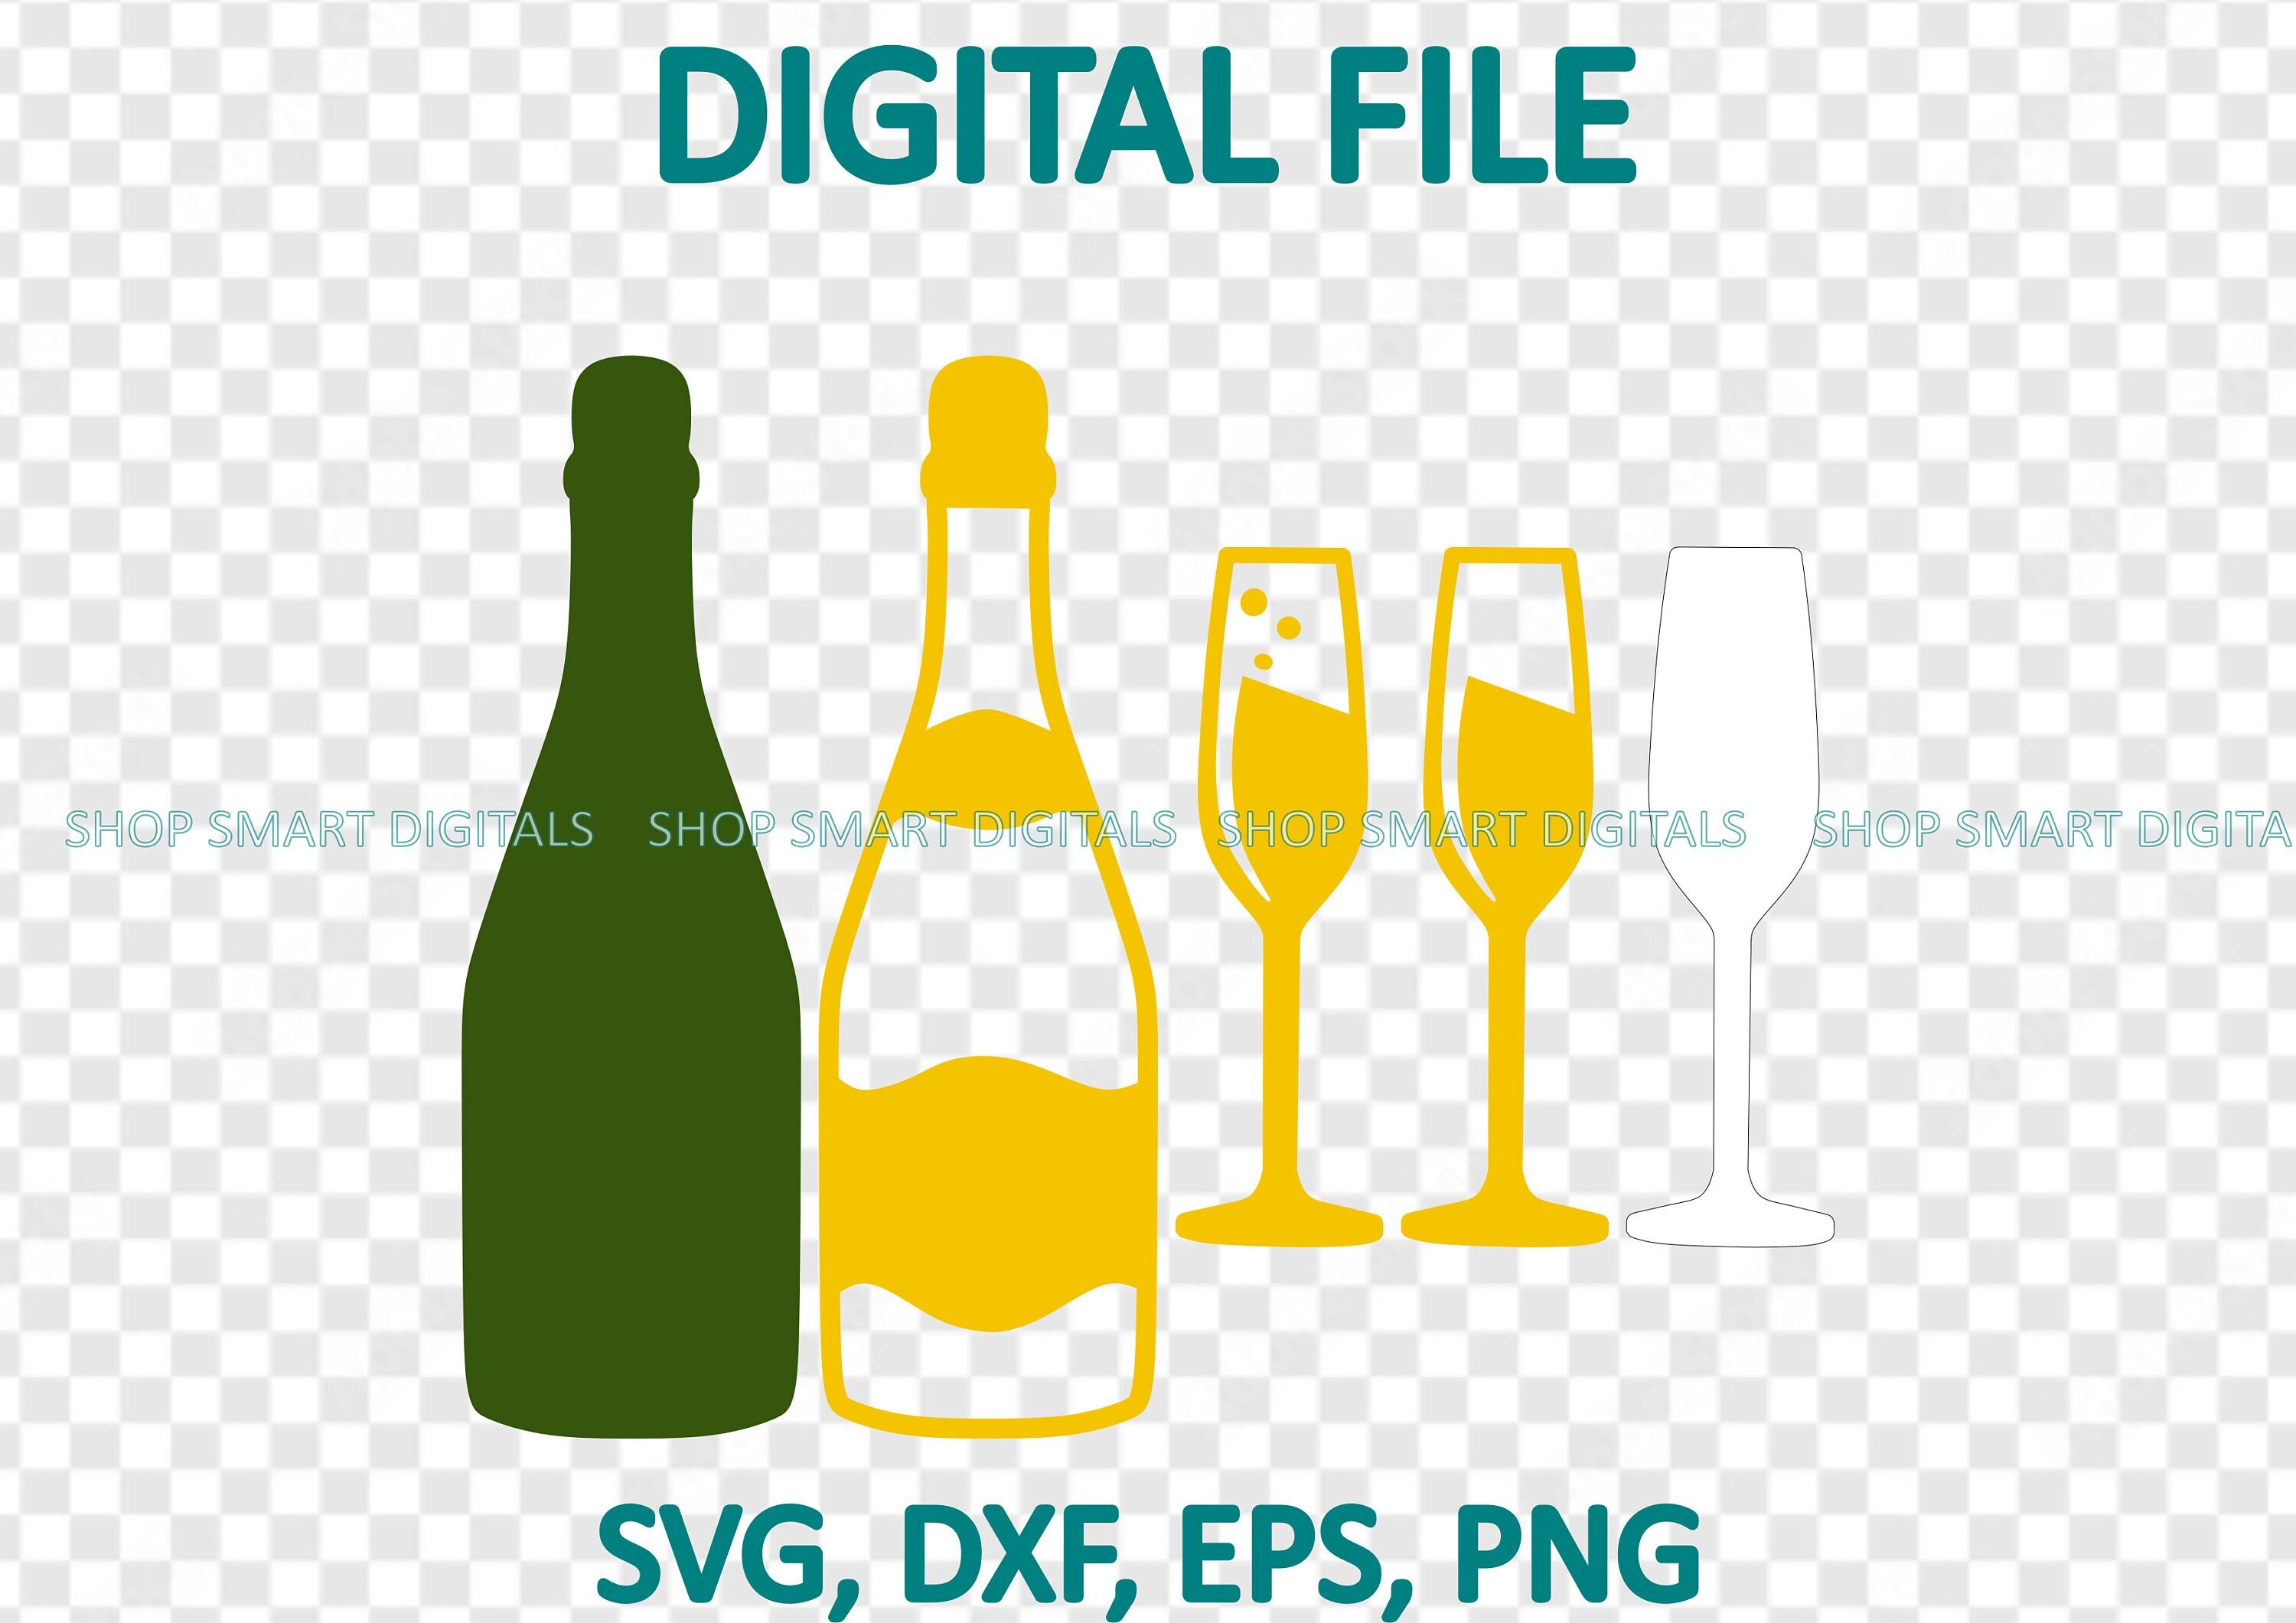 6oz Tapered Champagne Flute Tumbler Template - Sublimation or Cut - Digital  Download - SVG PNG DXF